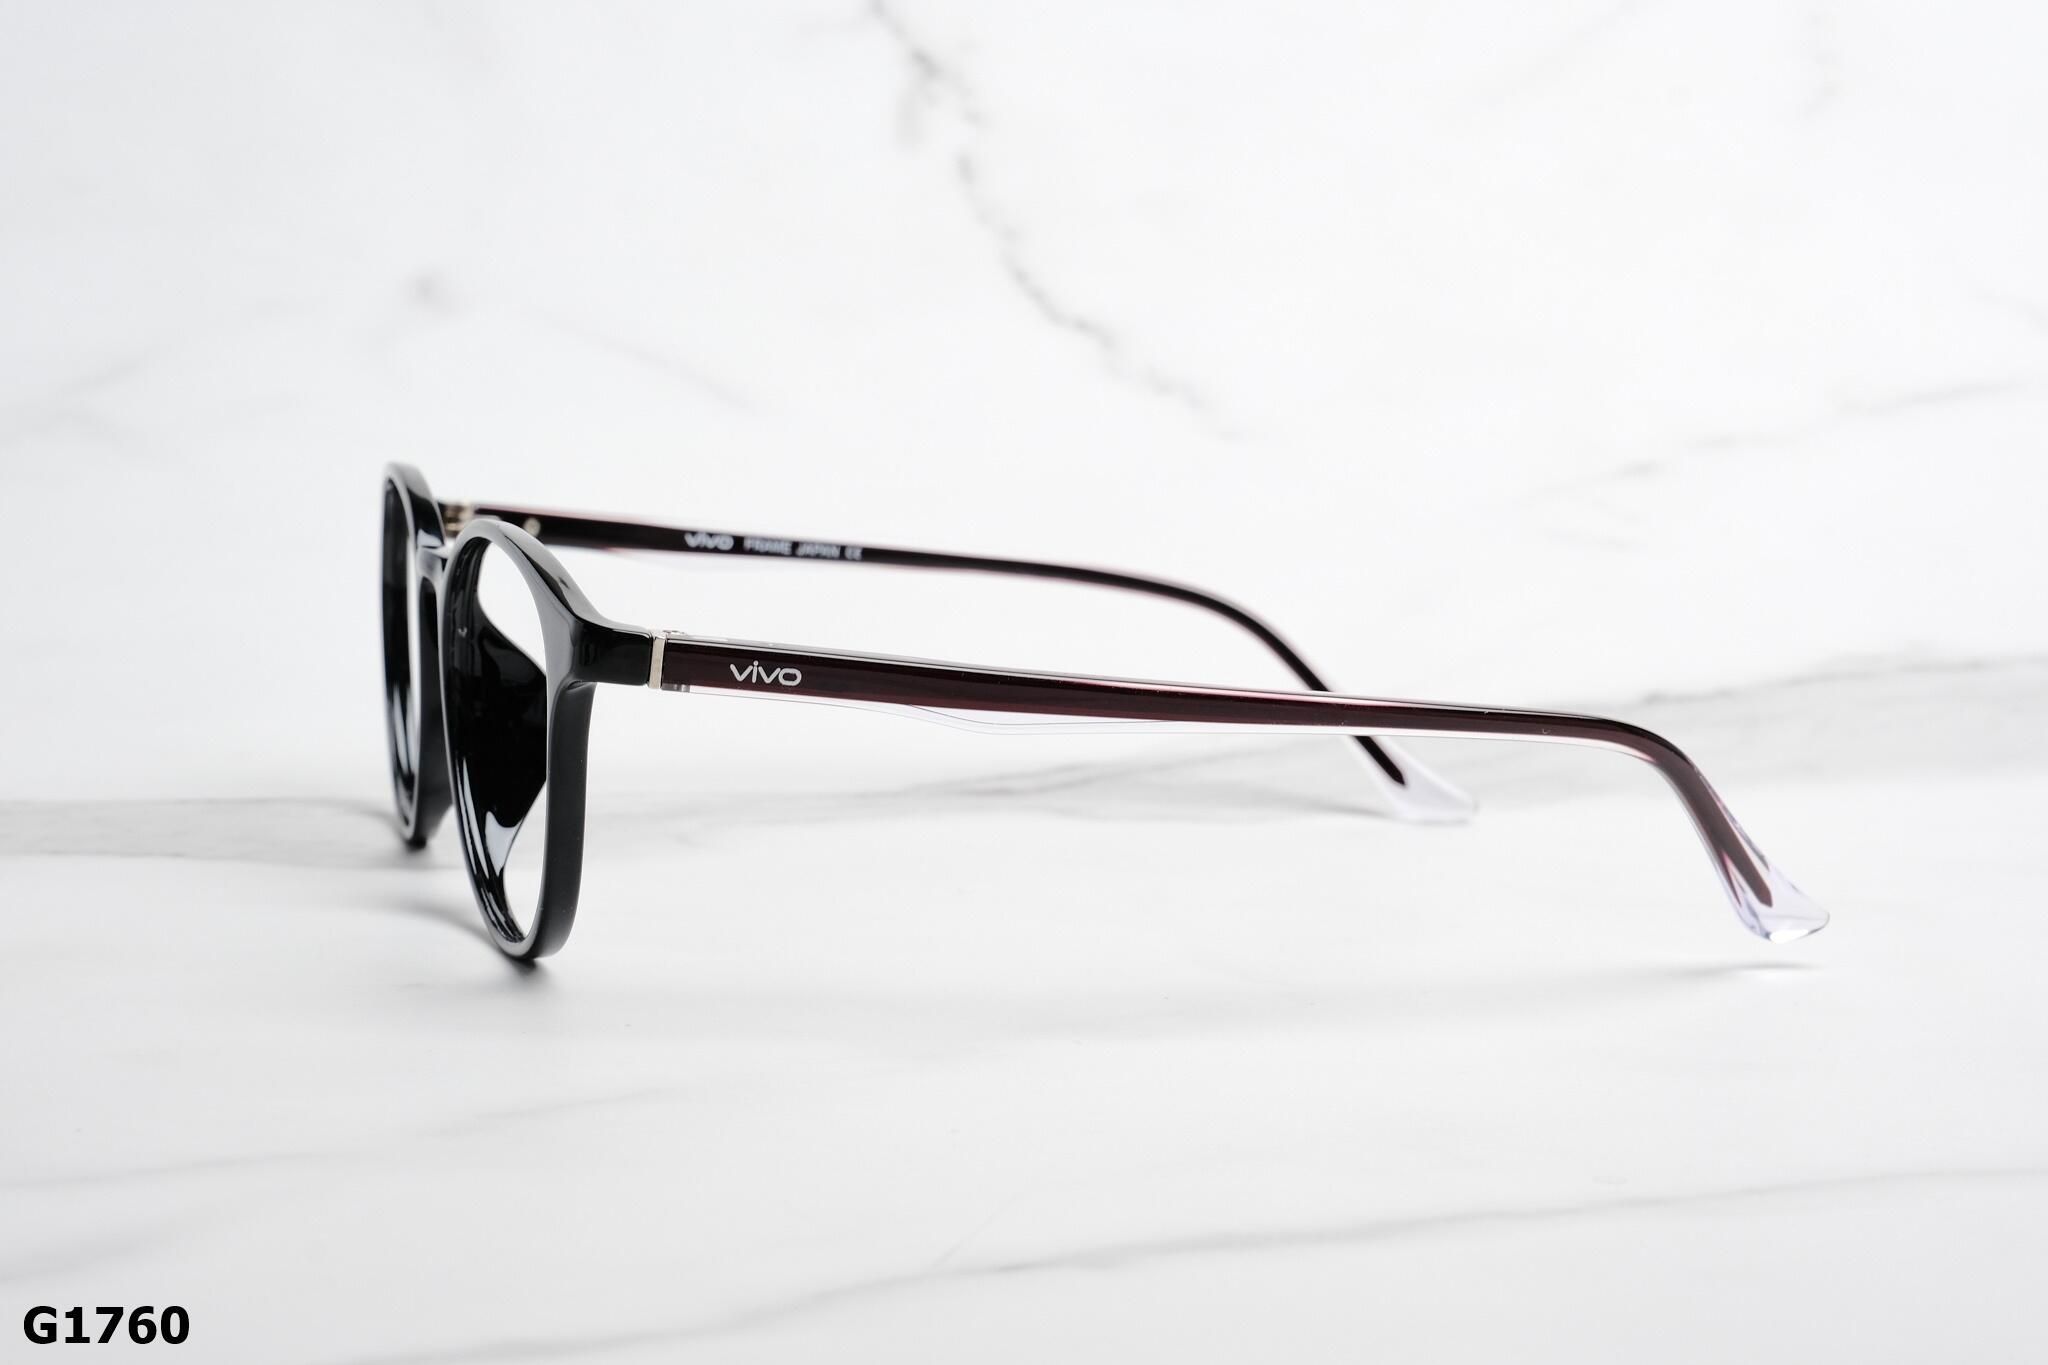  SHADY Eyewear - Glasses - G1760 